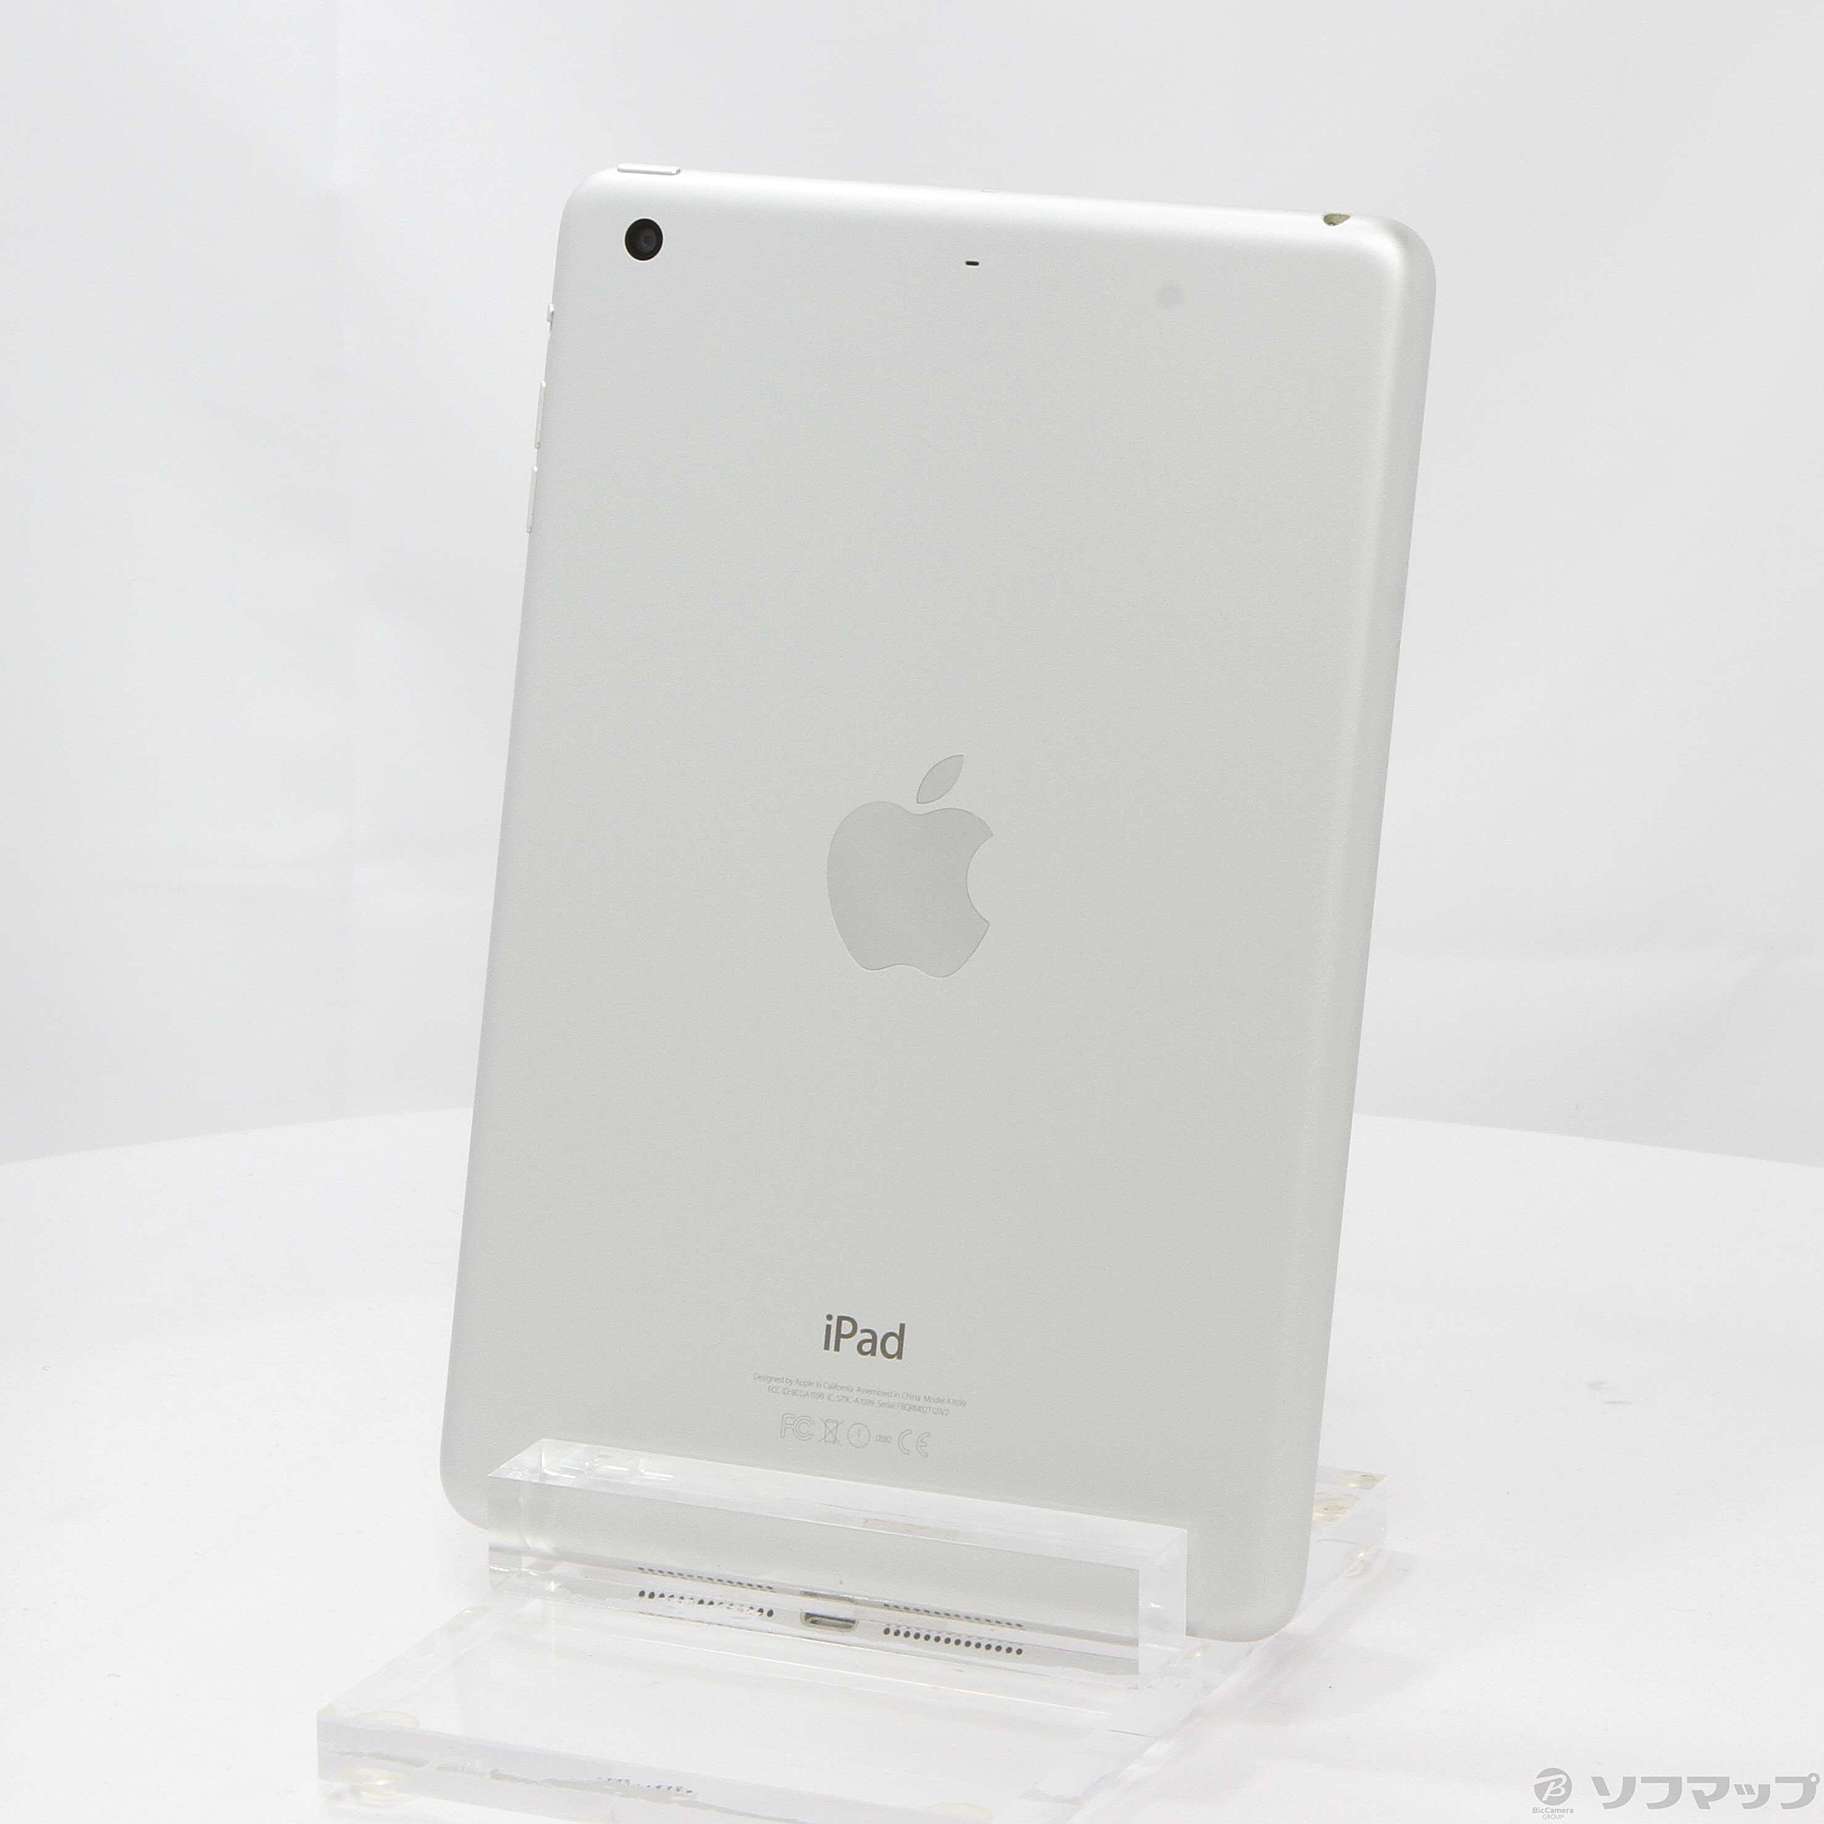 Apple iPad mini 3 wifiモデル 16GB シルバー